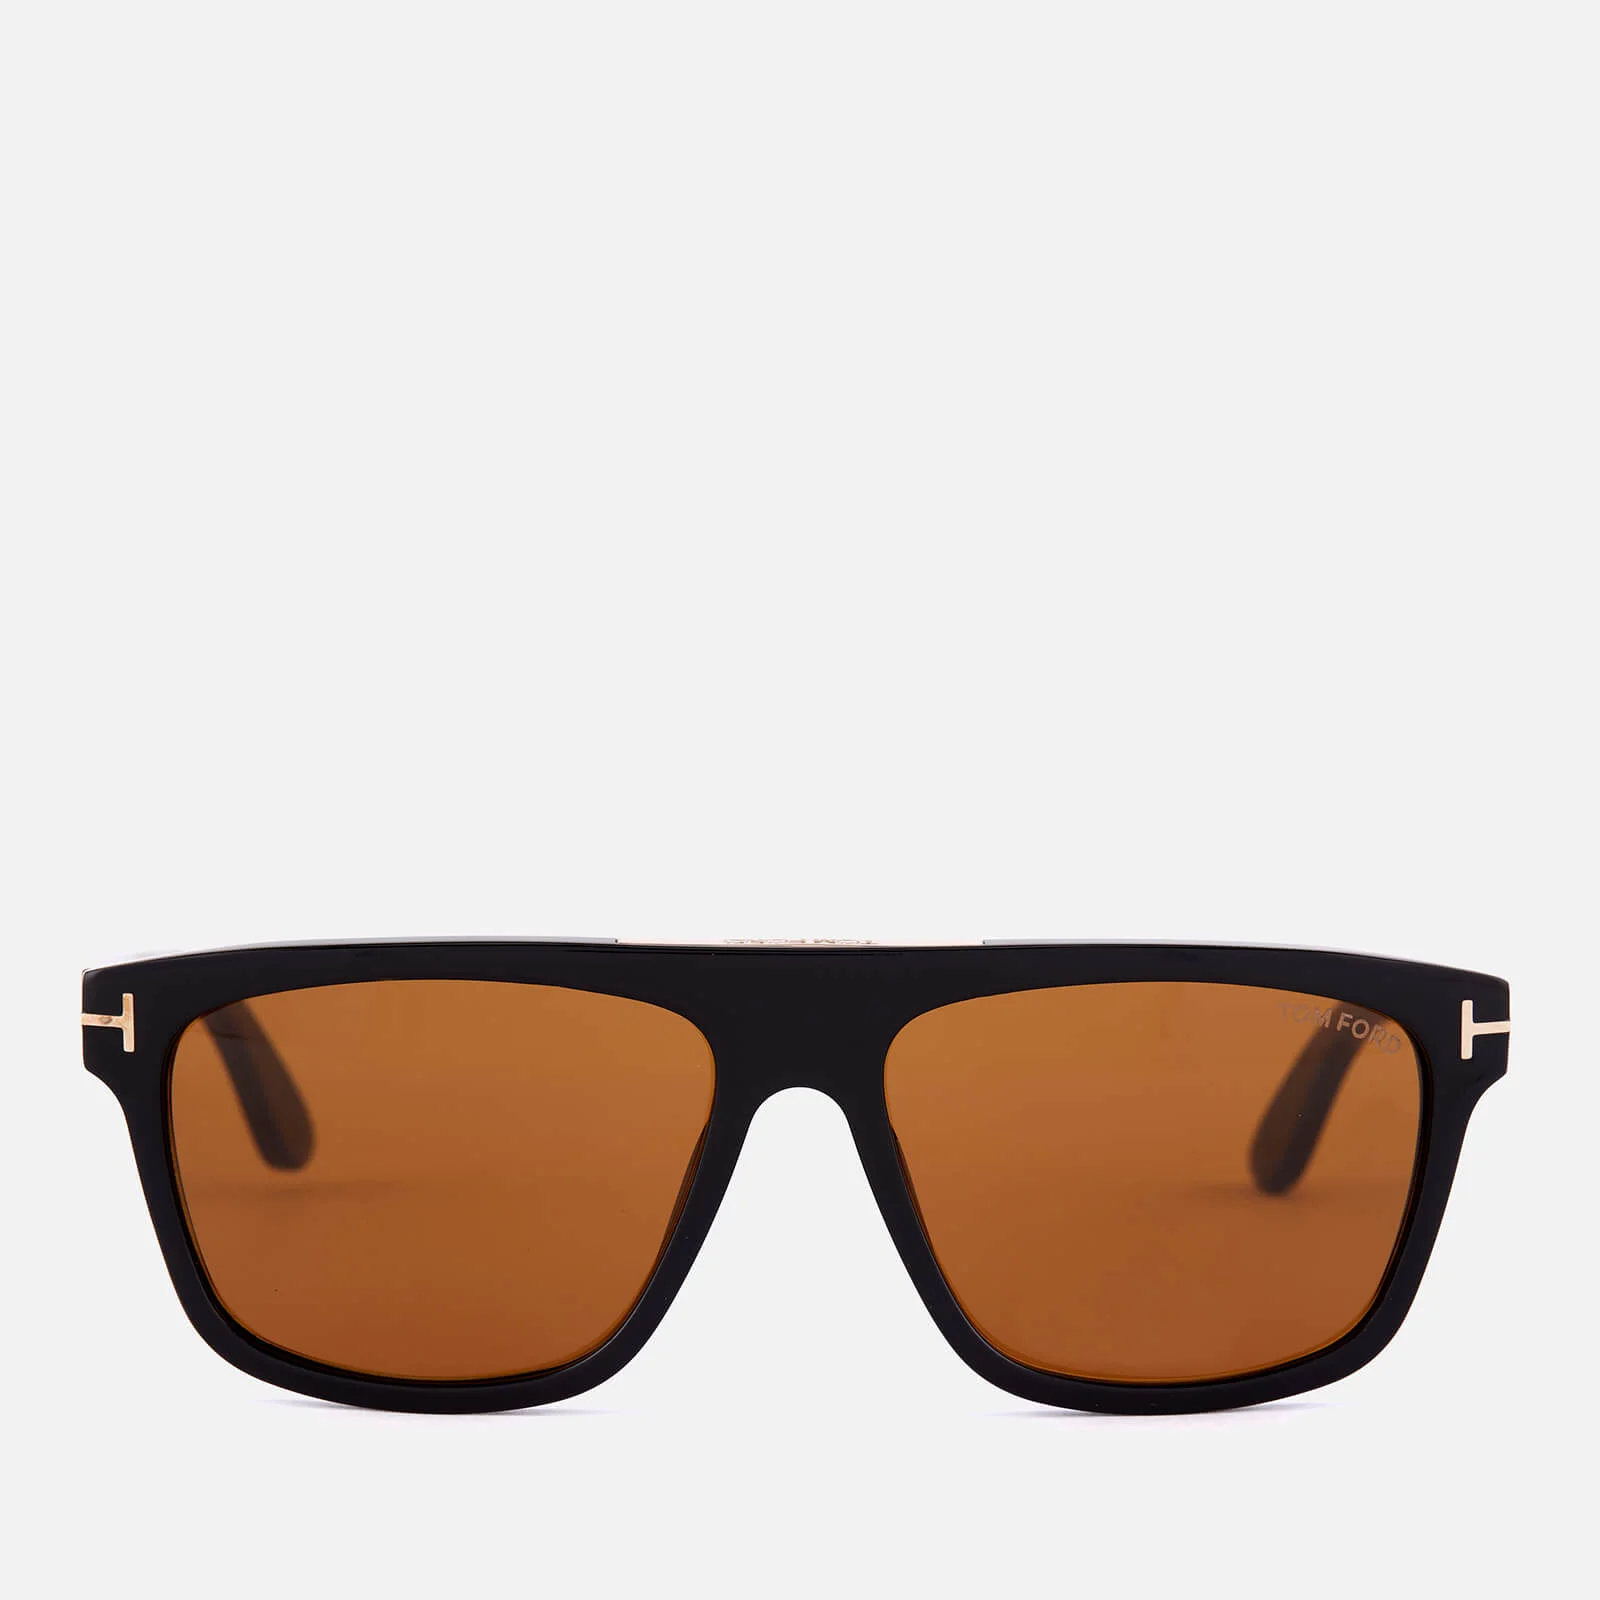 Tom Ford Men's Cecilio Sunglasses - Shiny Black/Brown Image 1